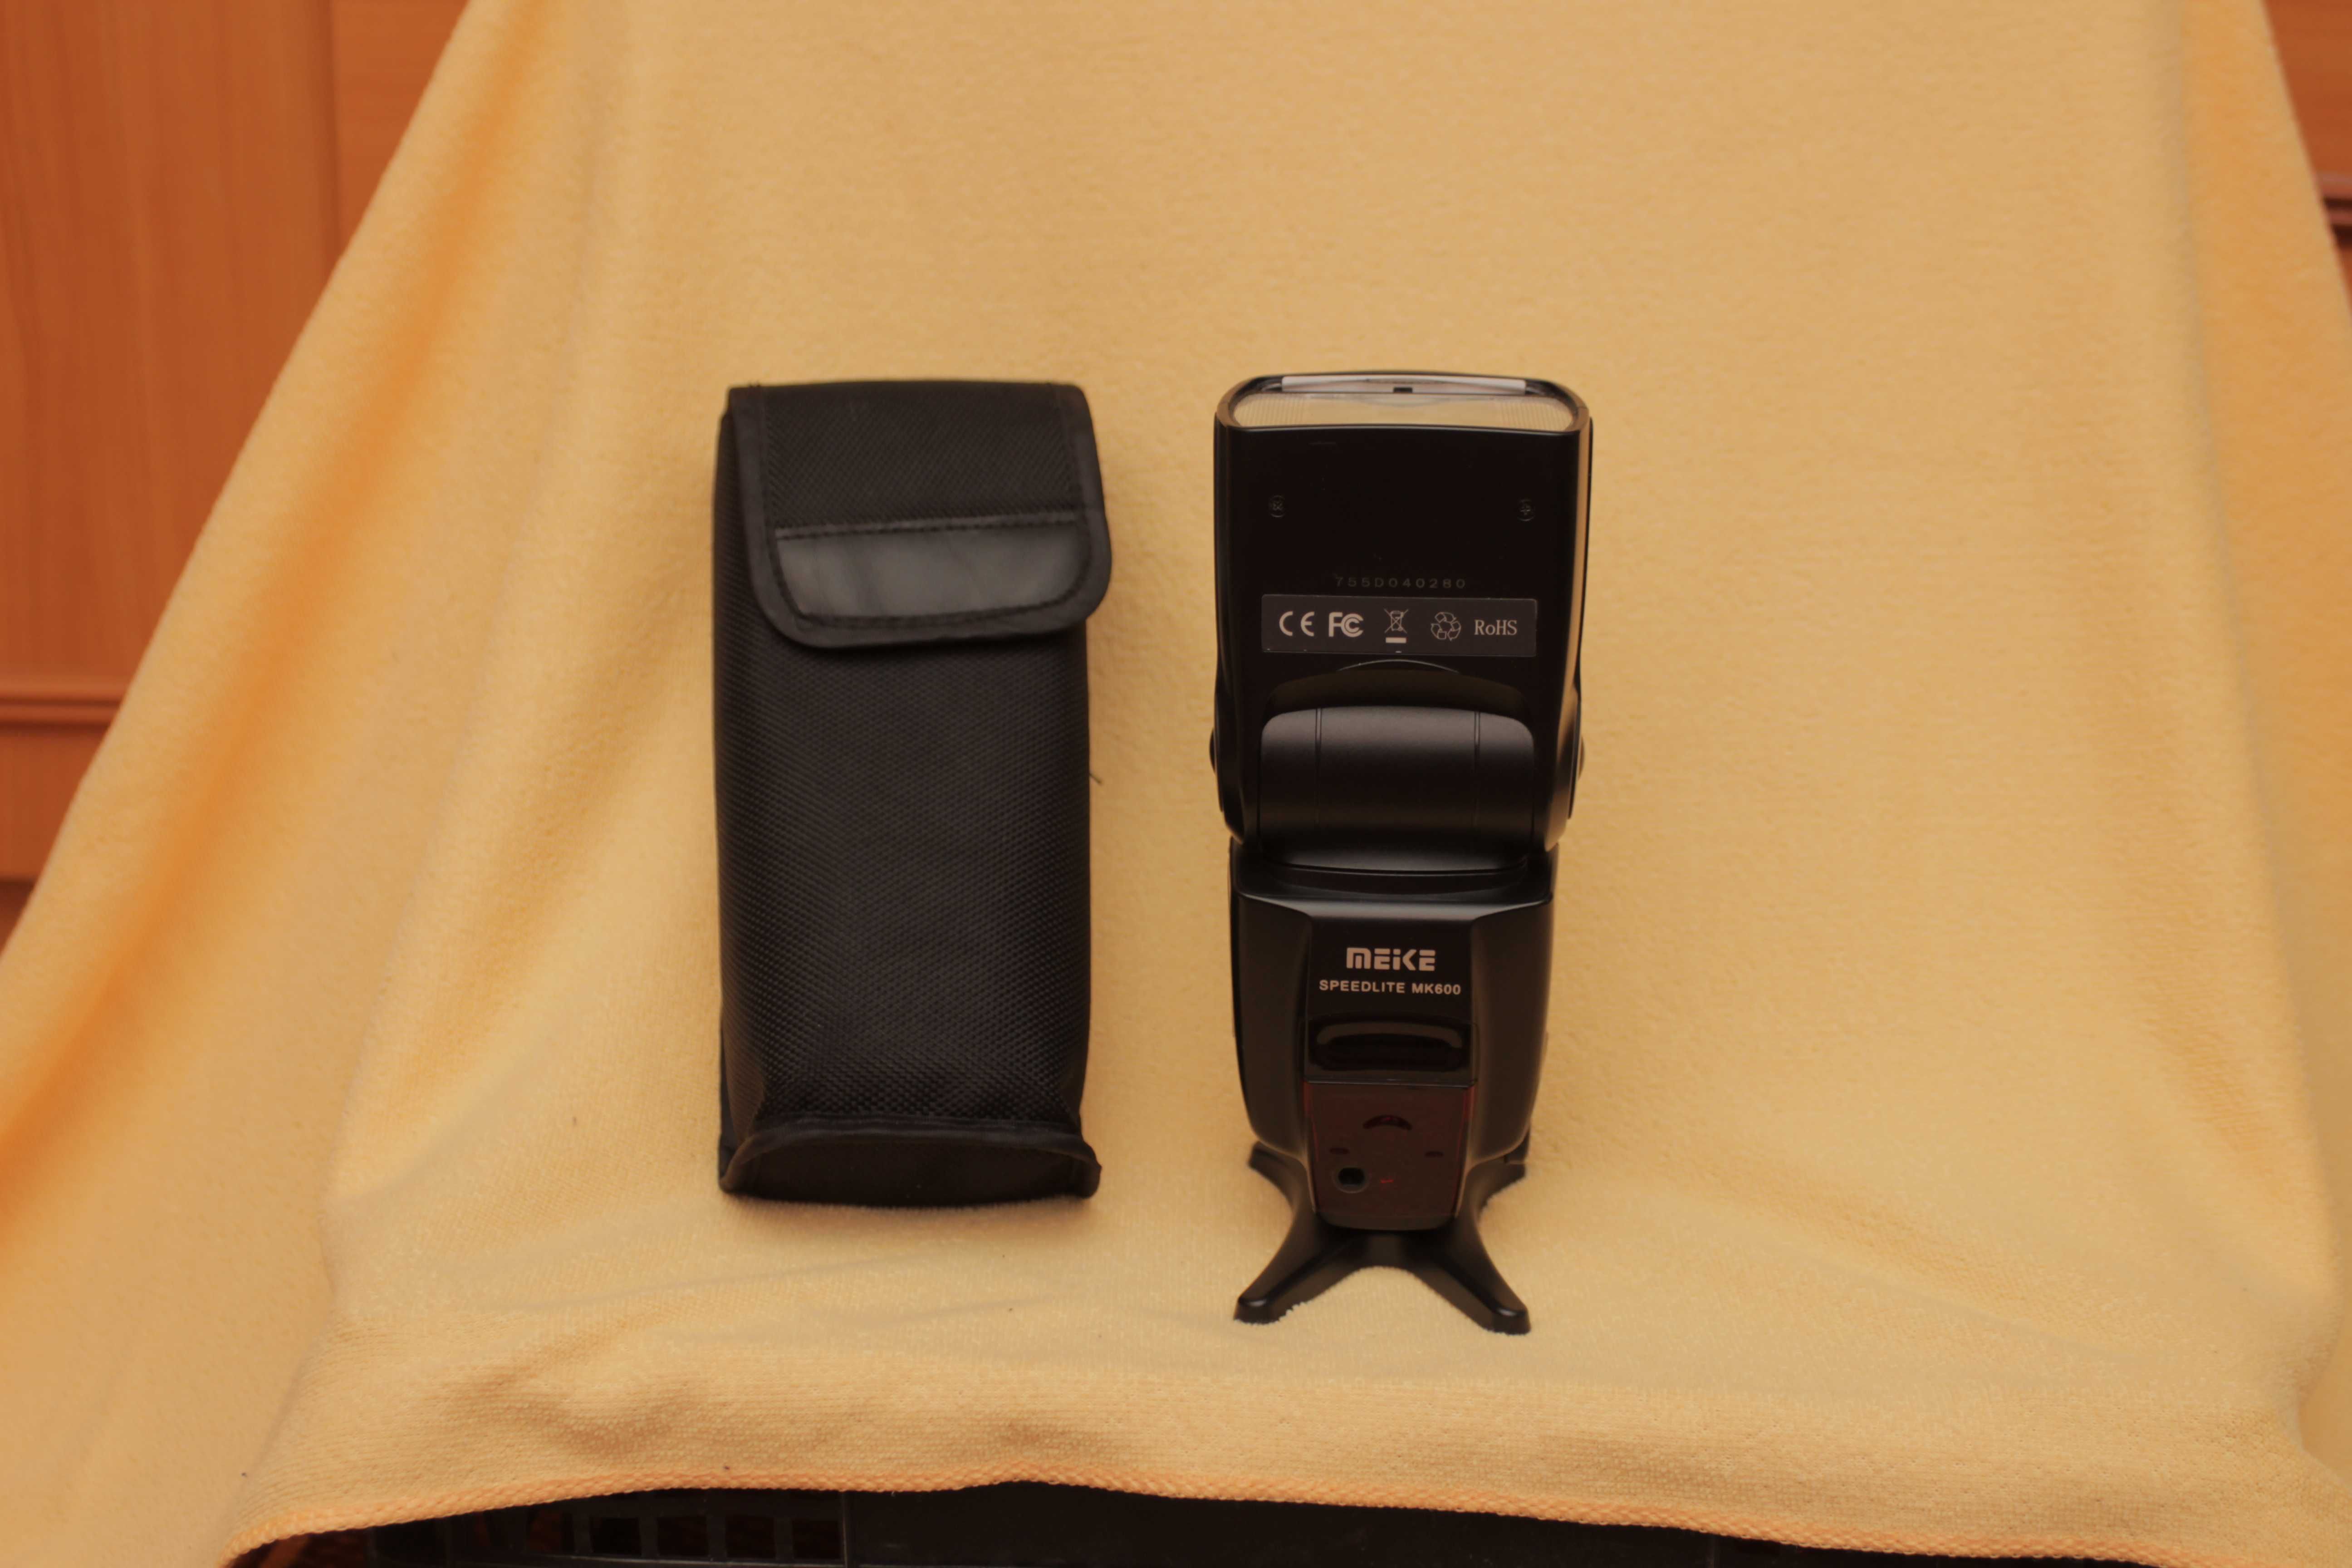 Зарядка и батарейка для фотоаппарата Canon, Nikon enel lp. Оригинал бу